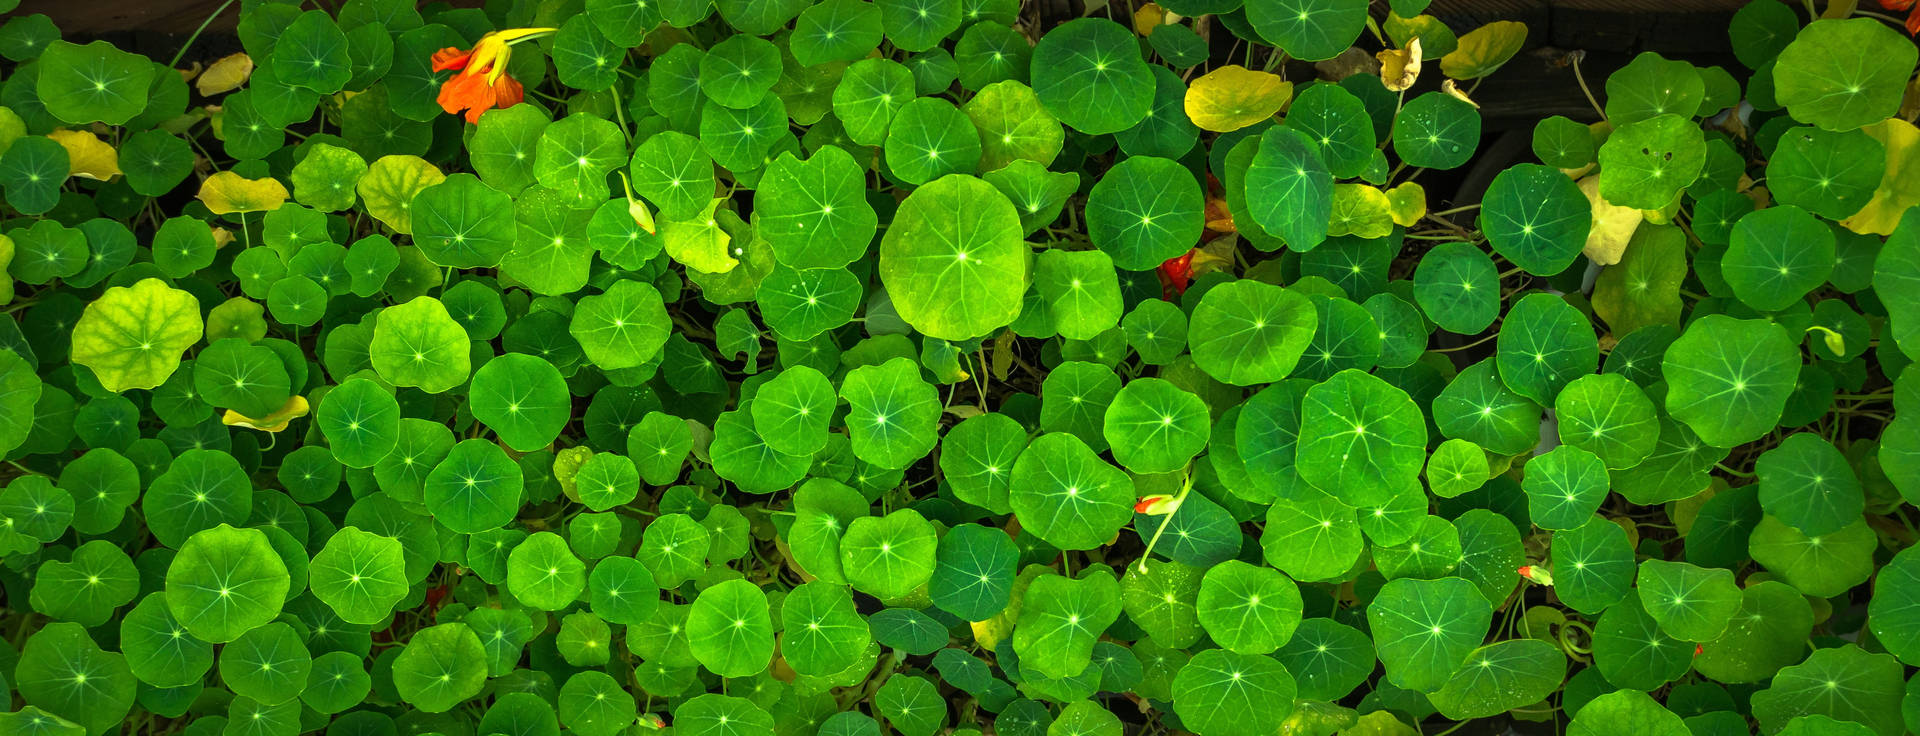 Pennywort Green Leaves Background